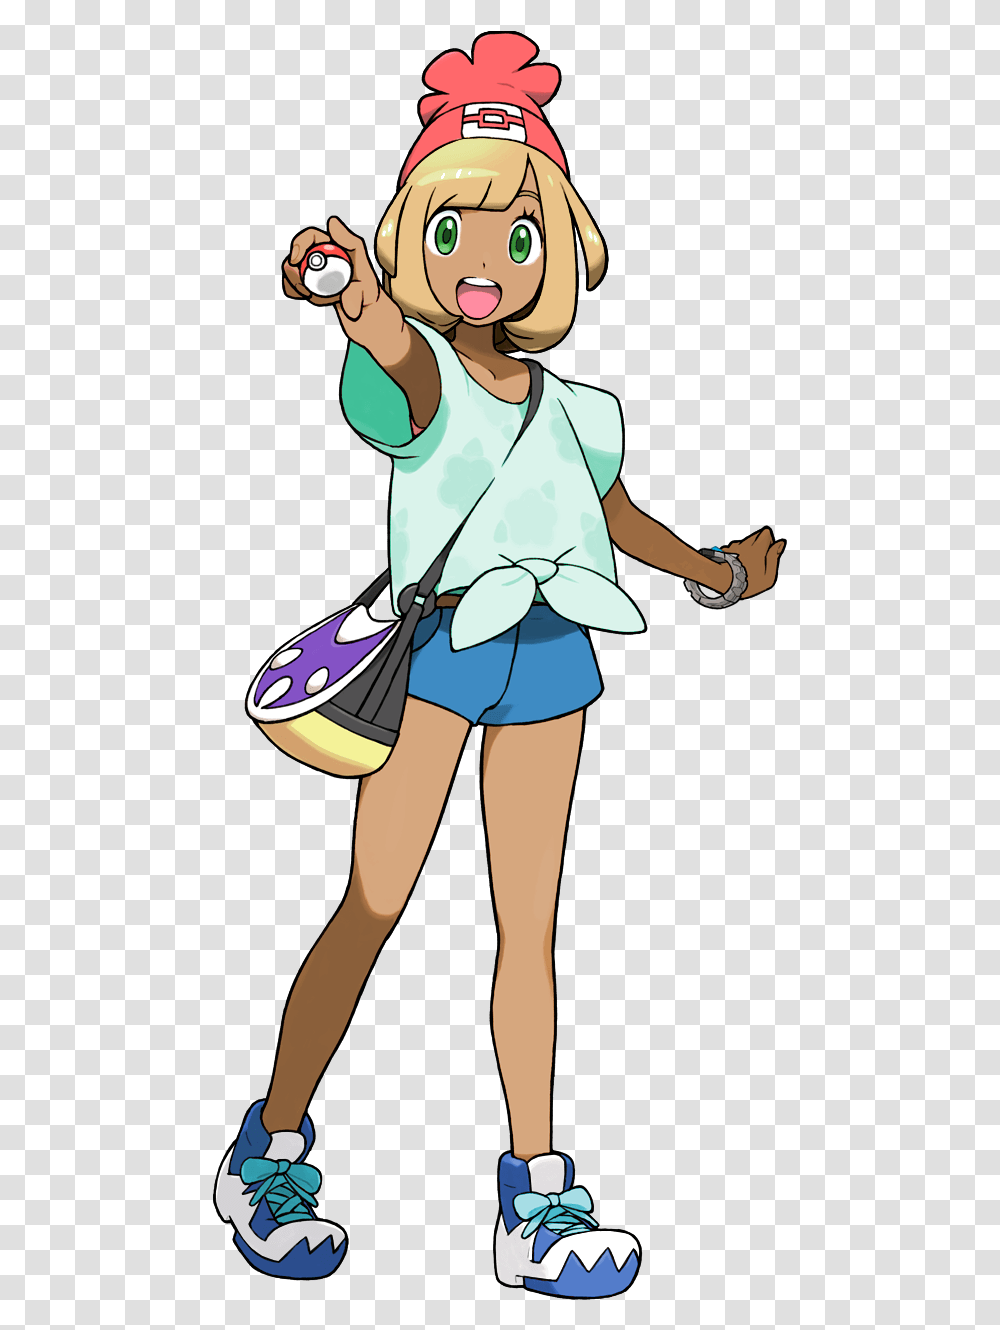 Hd Custom Female Pokemon Trainer Pokemon Alola Female Trainer, Person, Clothing, Tennis Racket, Outdoors Transparent Png